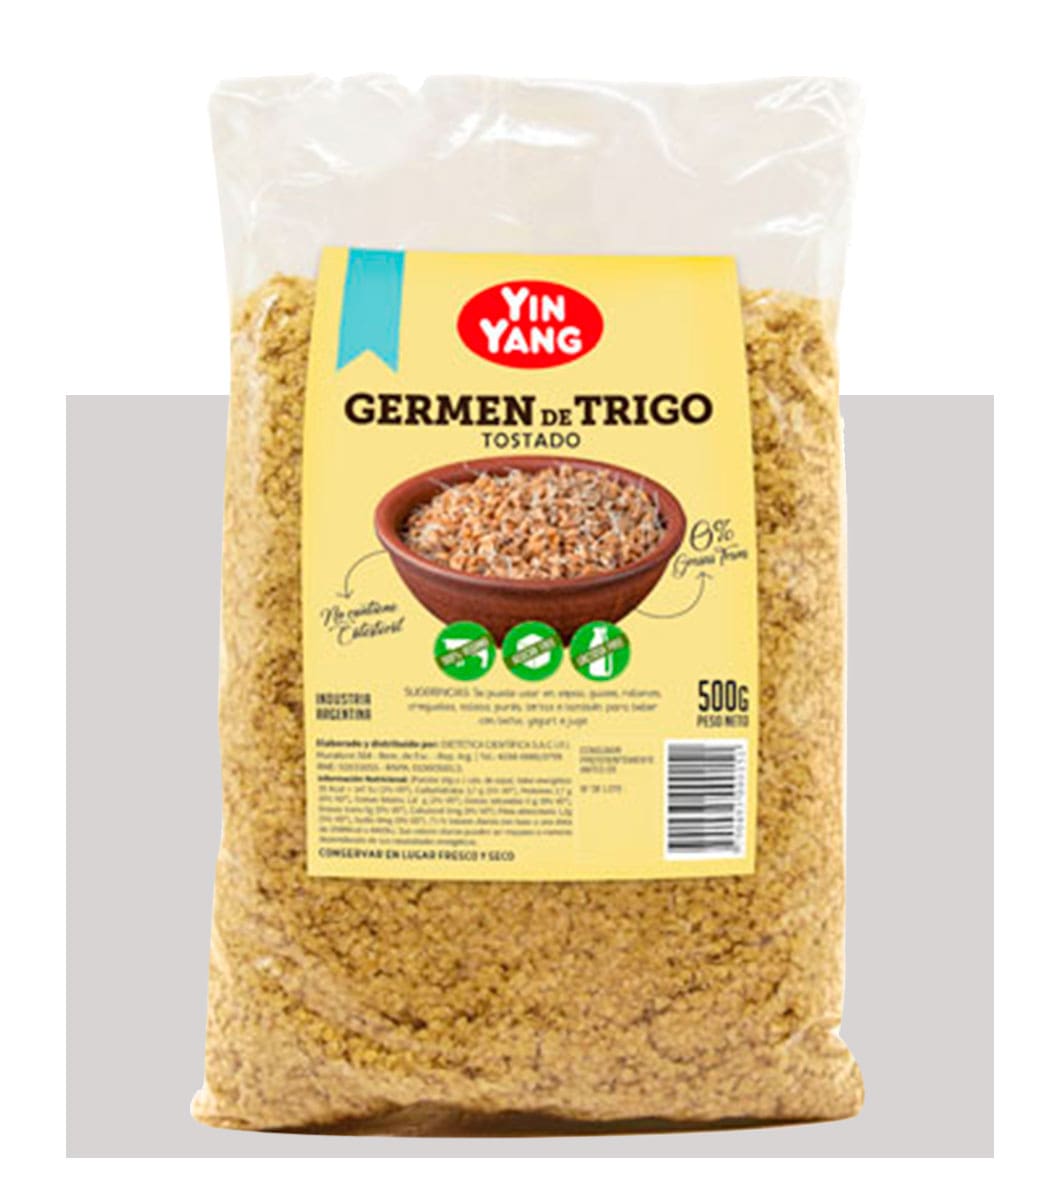 https://yinyangargentina.com.ar/wp-content/uploads/2022/07/cereales-germen-trigo-tost-min.jpg